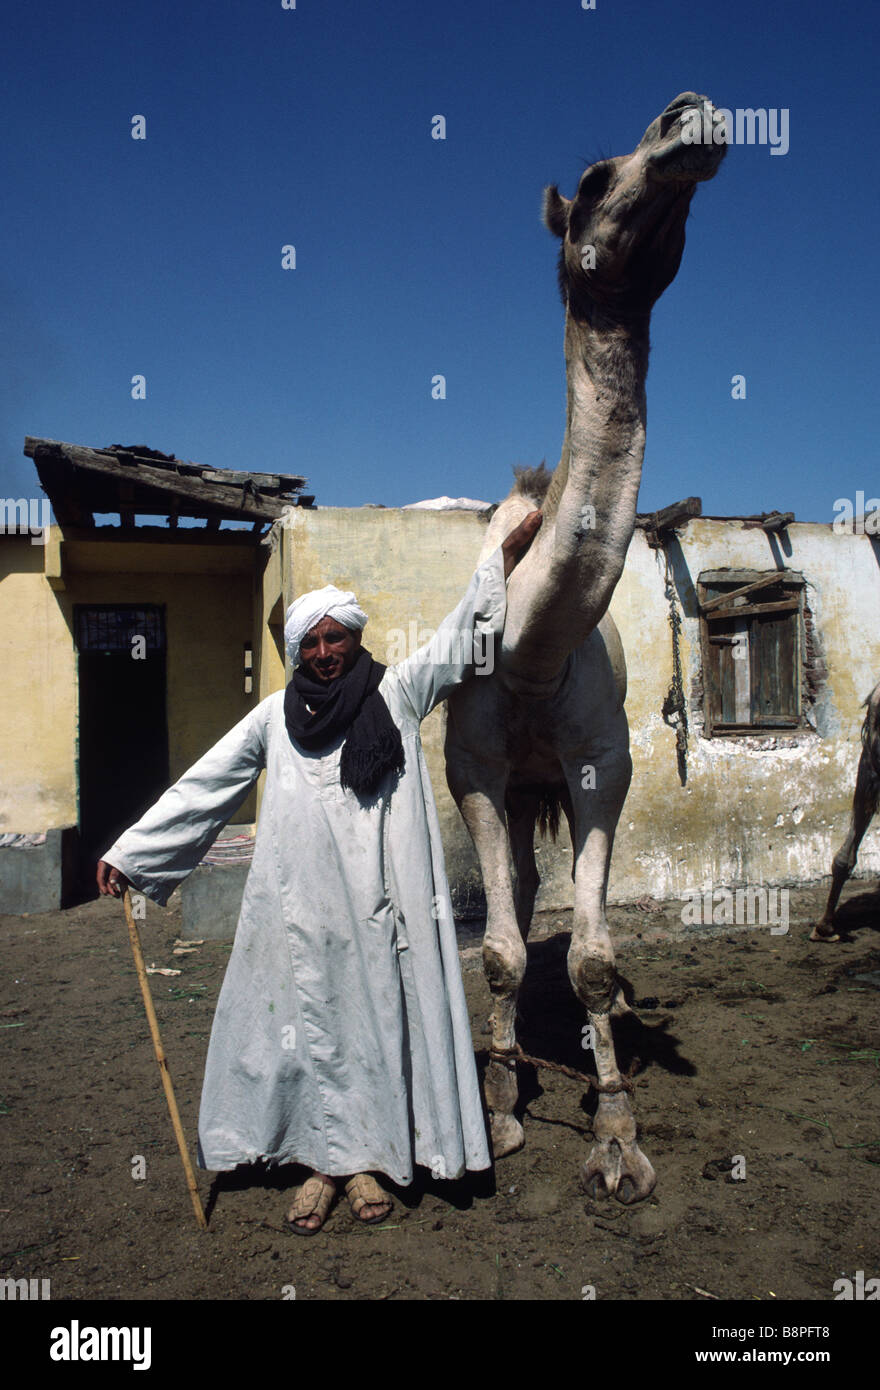 Camel trader, camel market, Cairo, Egypt Stock Photo - Alamy